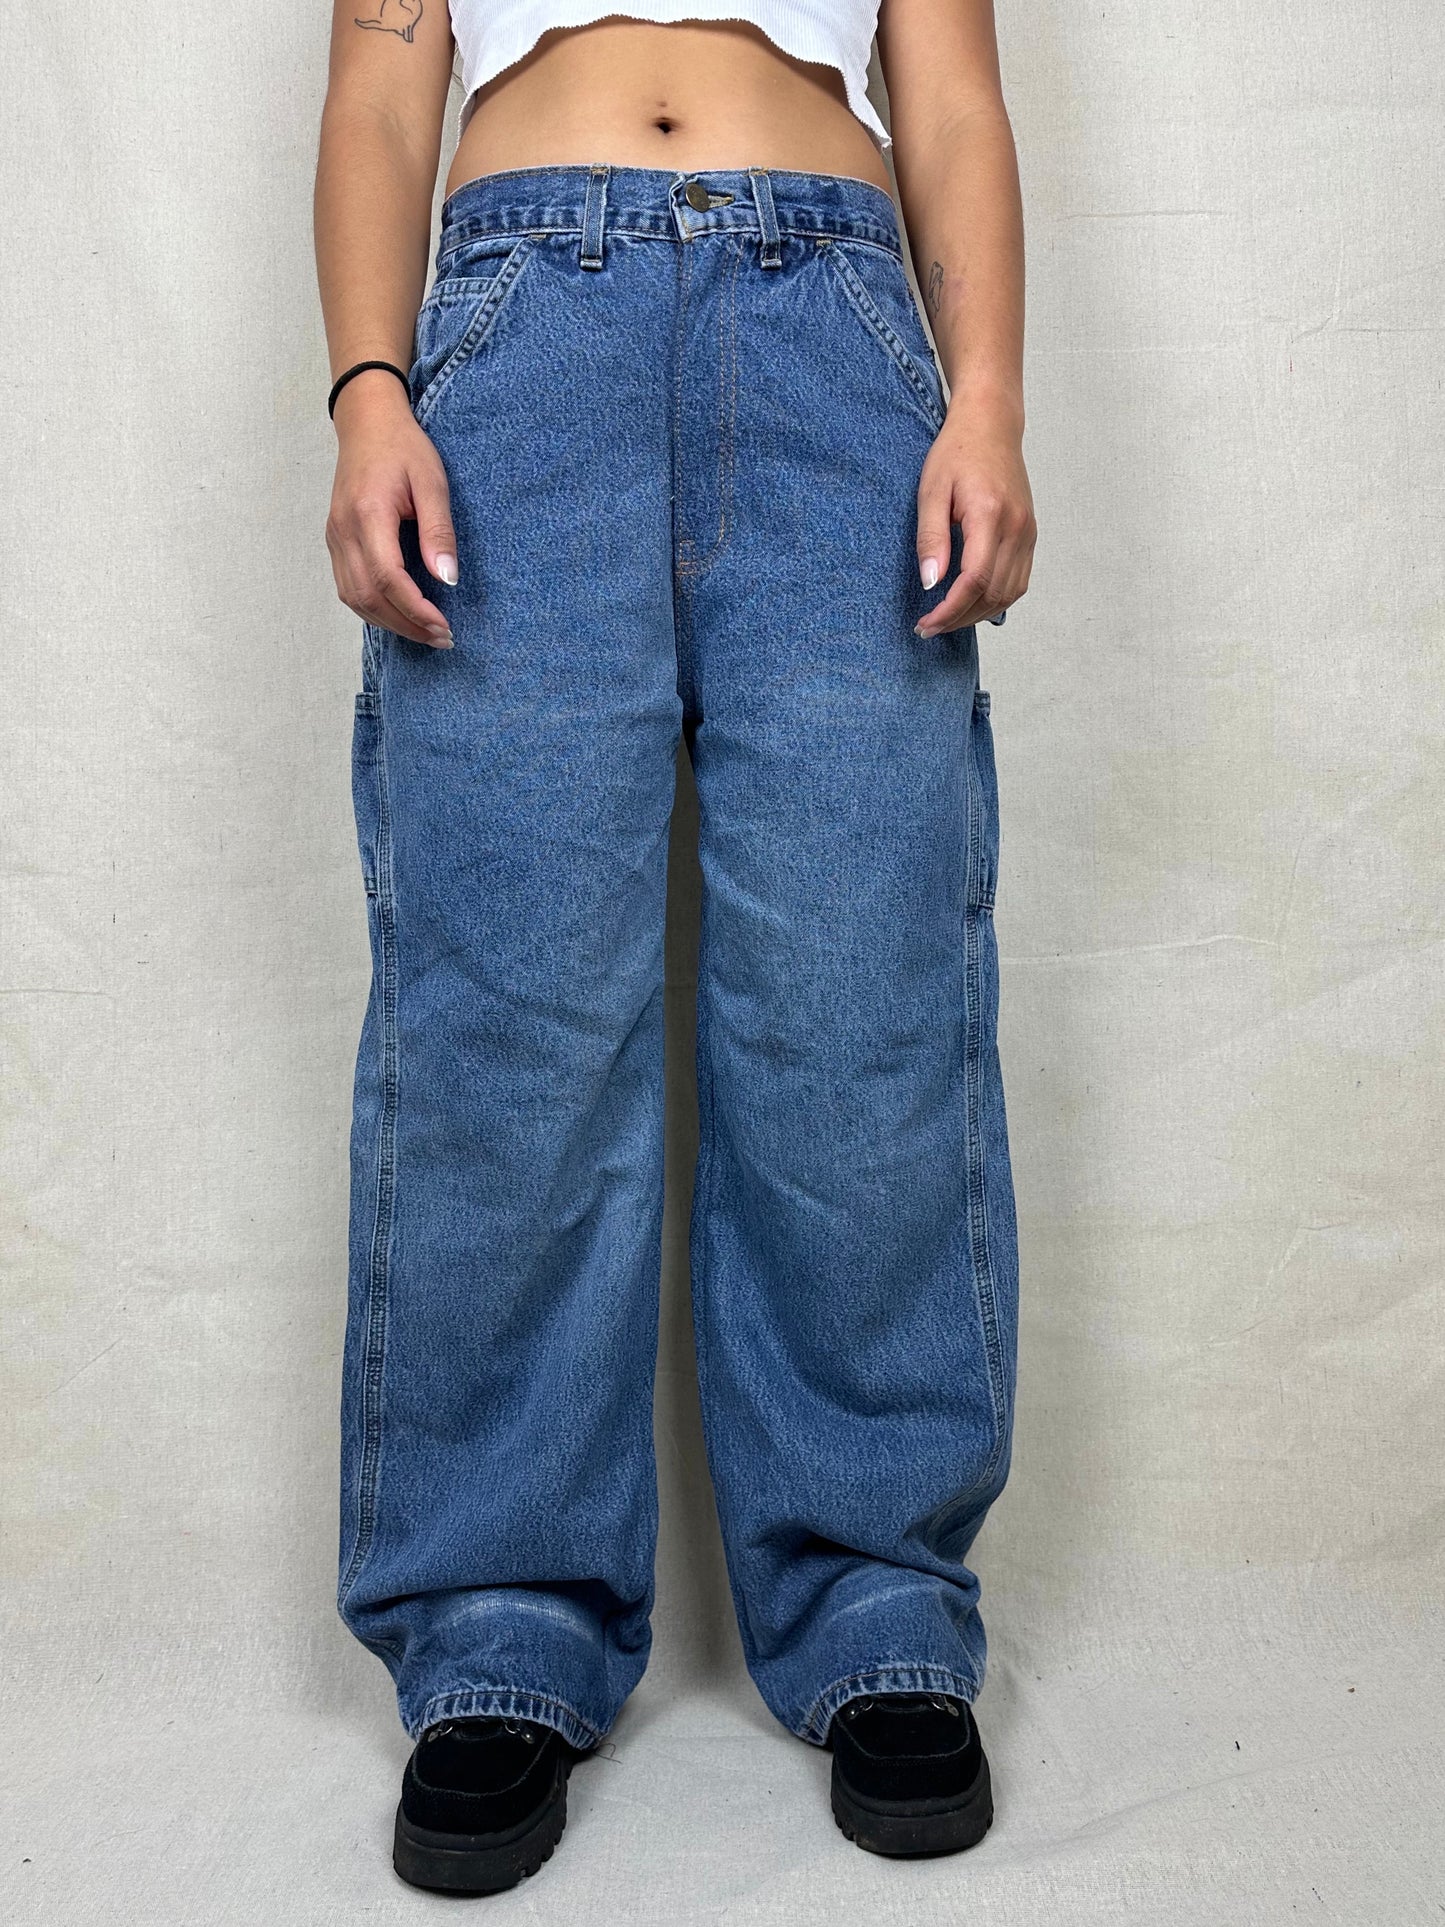 90's Carhartt Vintage Carpenter Jeans Size 31x31